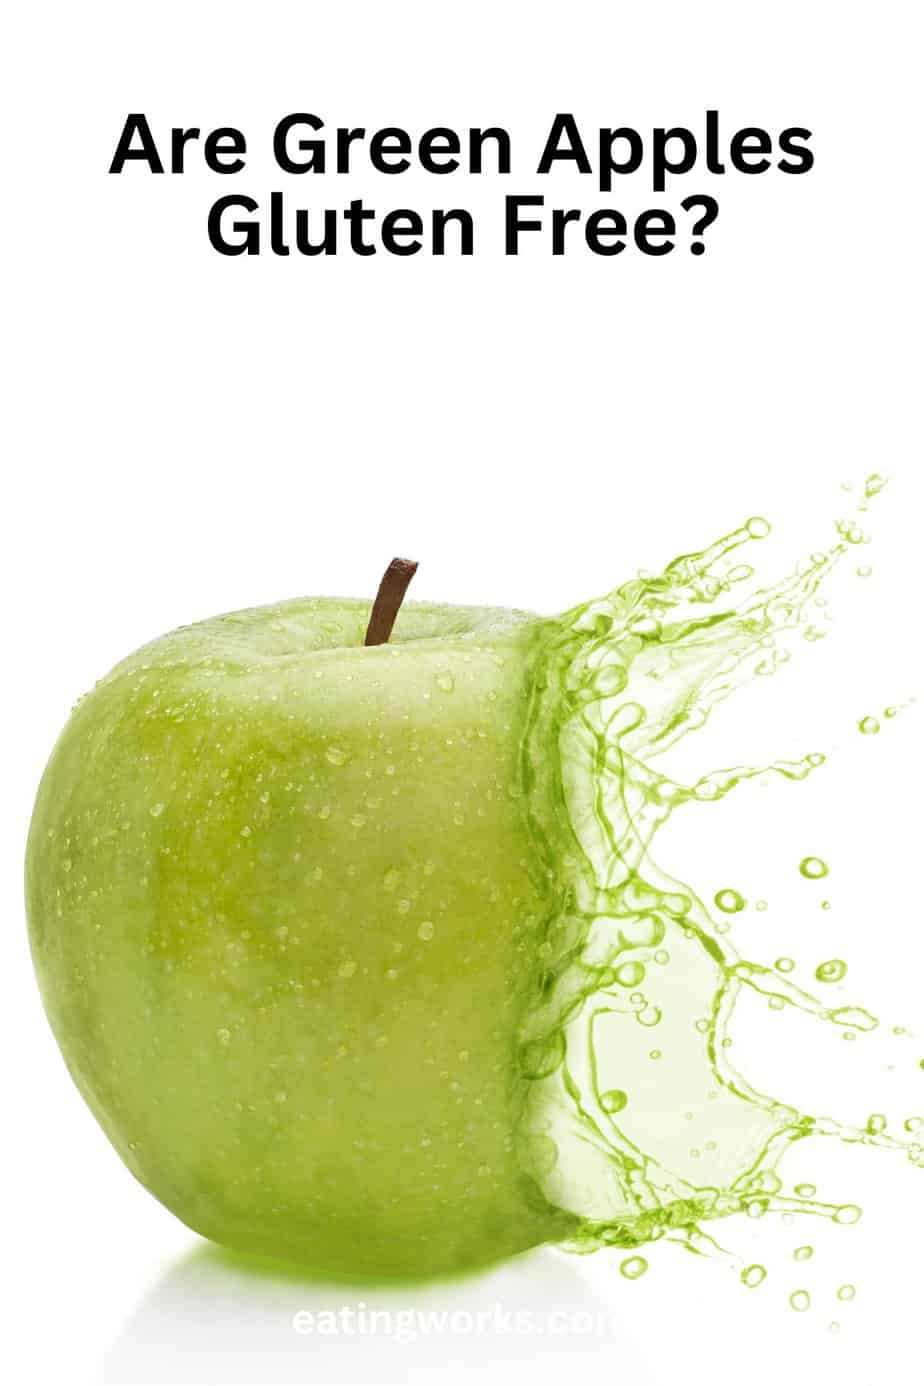 is orange juice gluten free, Is Orange Juice Gluten Free? (What You NEED To Know!)